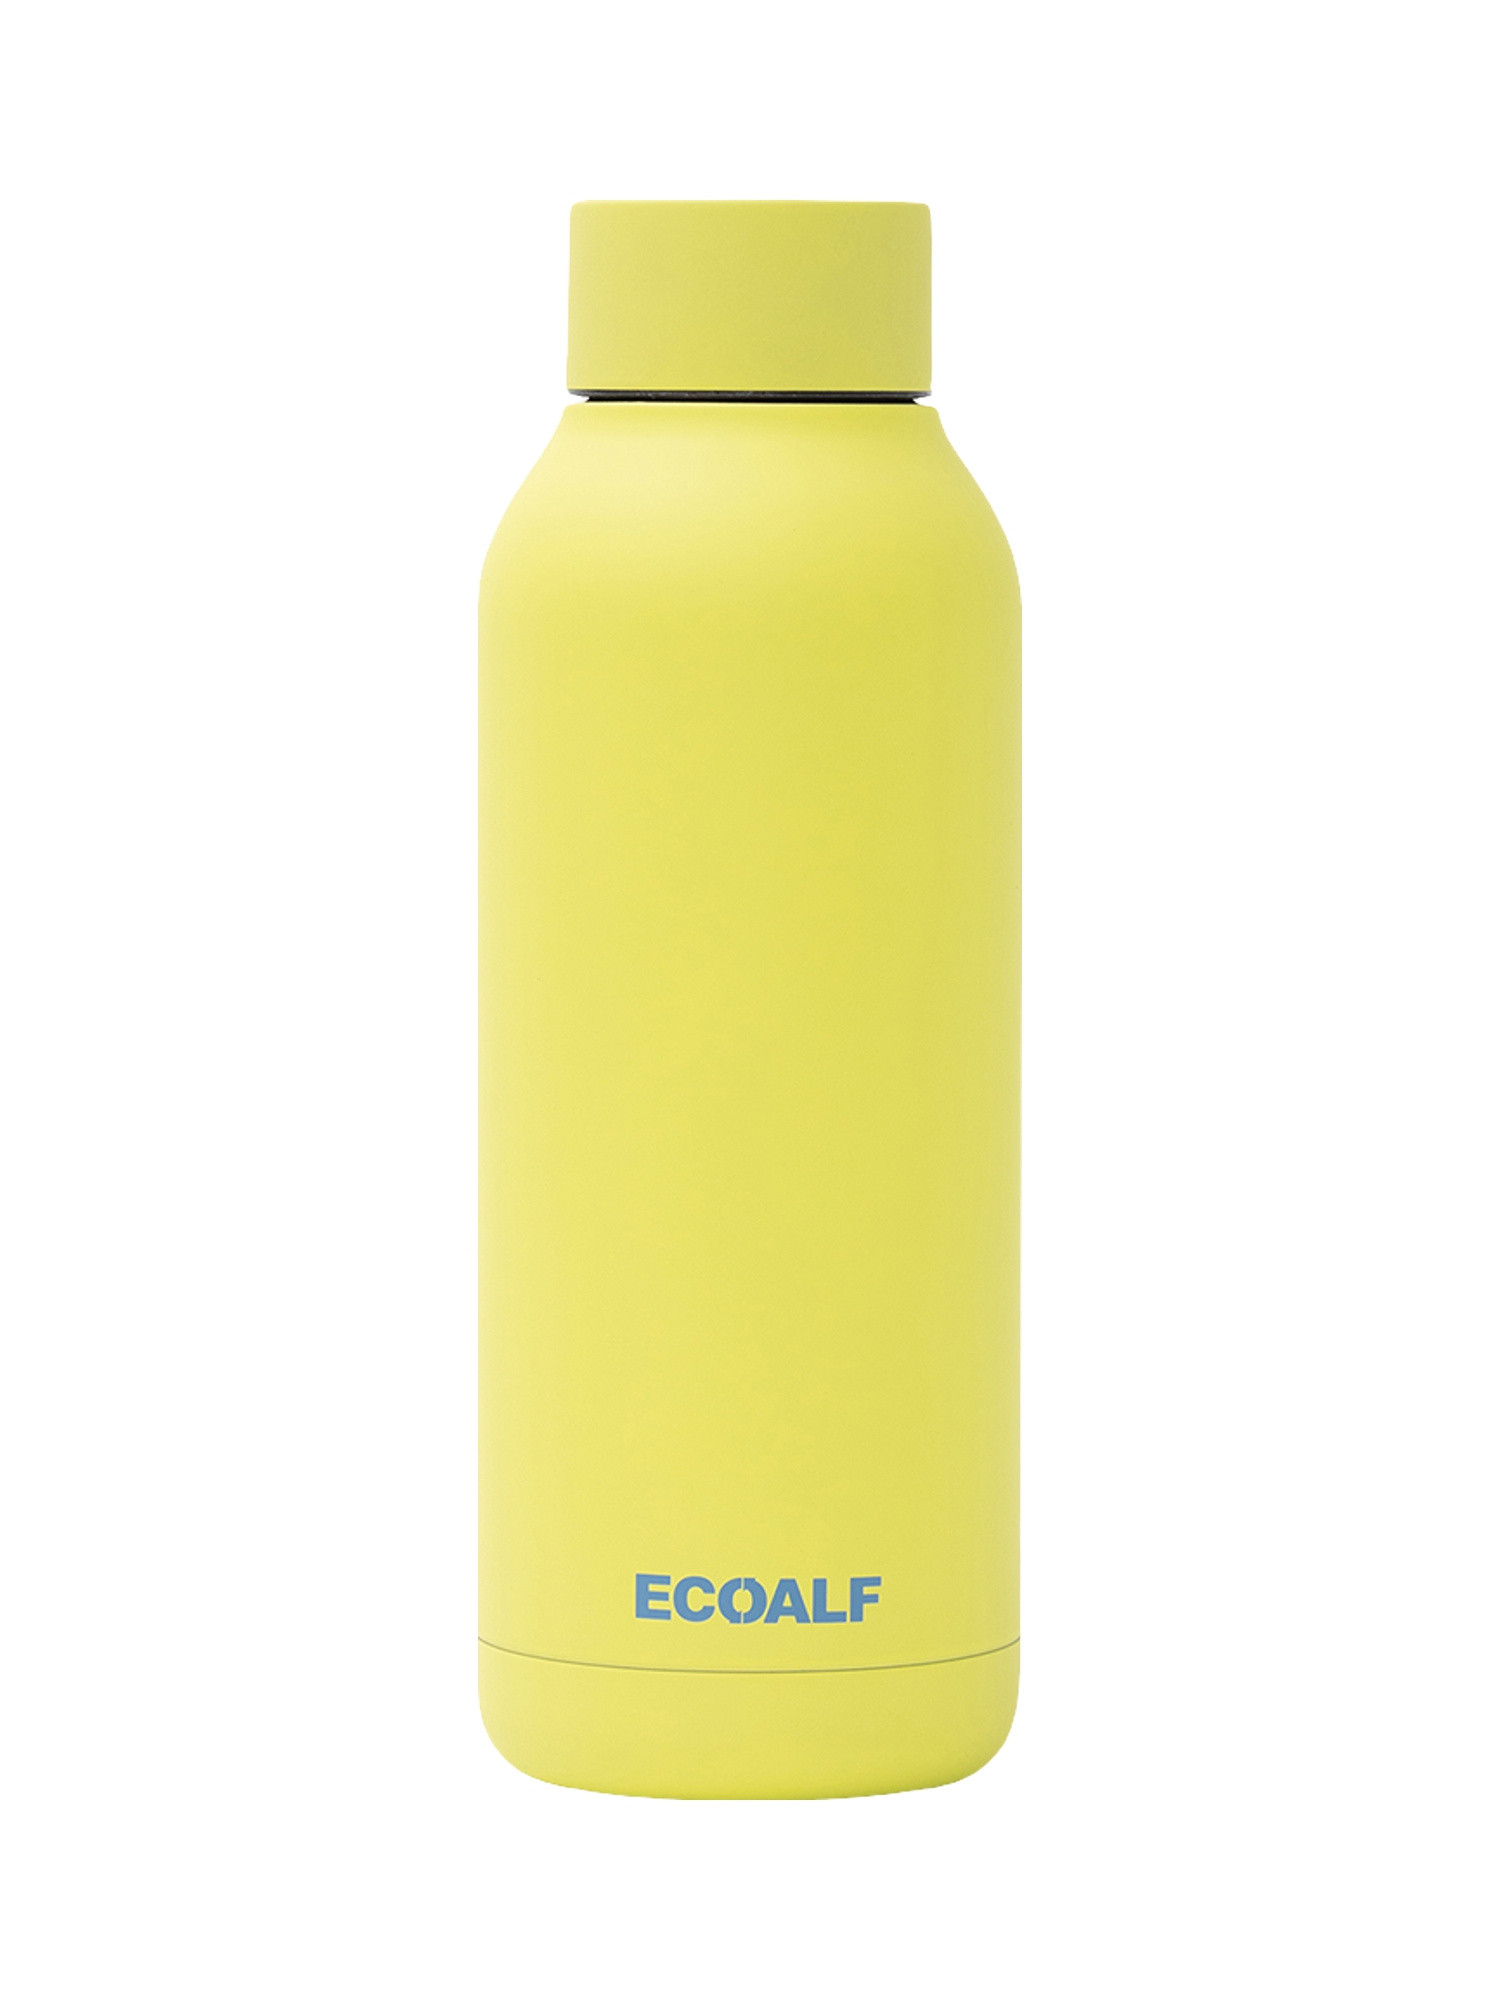 Ecoalf - Bottle with writing, Yellow, large image number 1